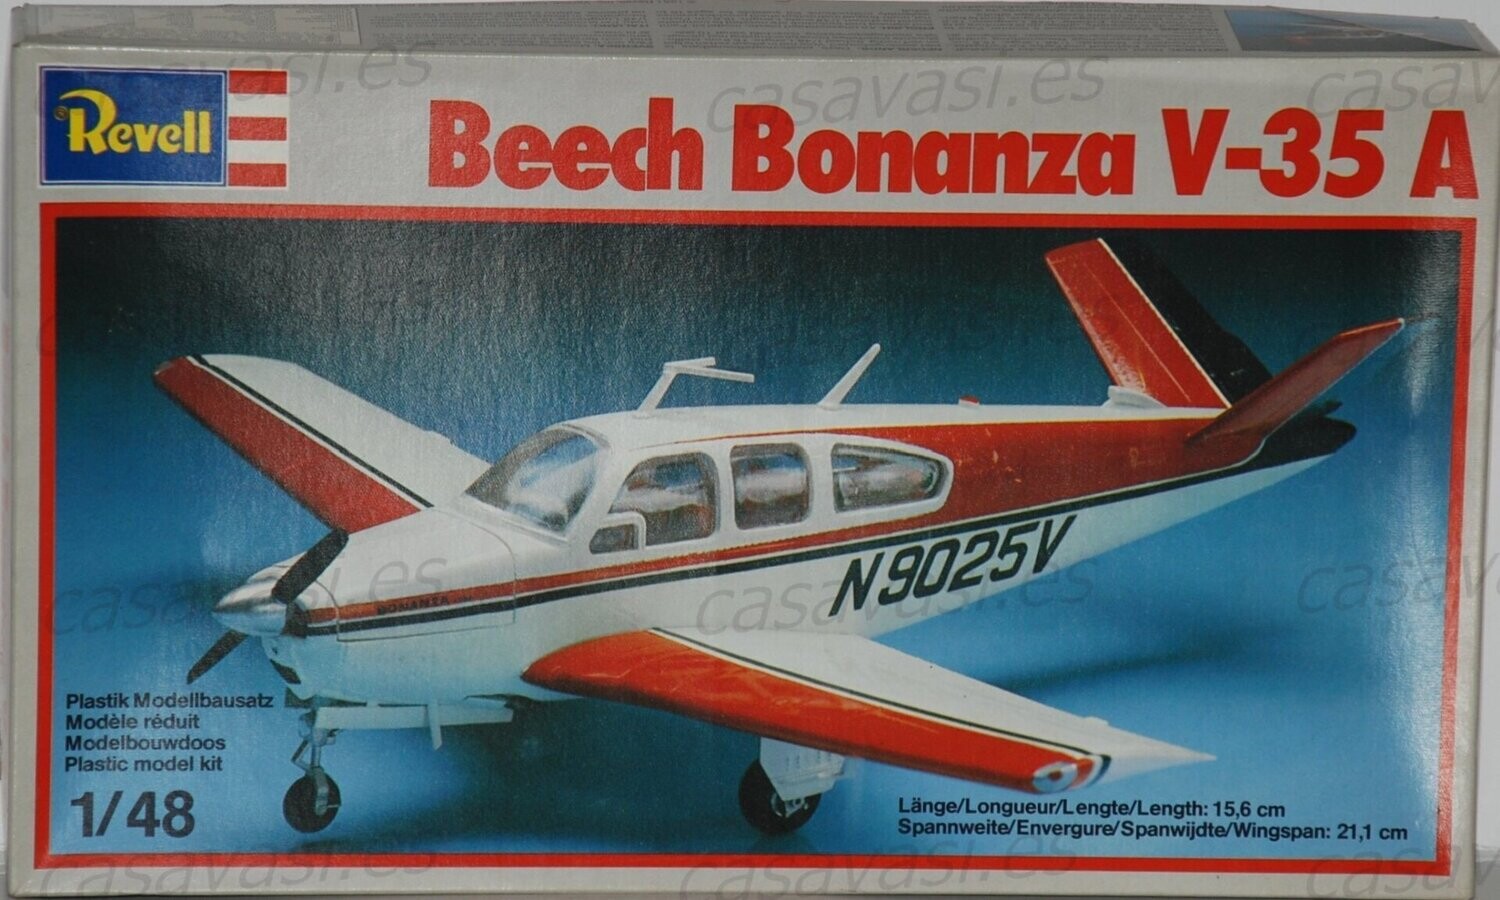 Made in Germany - Revell - 1981 - H-4115- 1/48 - Beech Bonanza V-35 A
Box Size 30.5 x 18 cm.